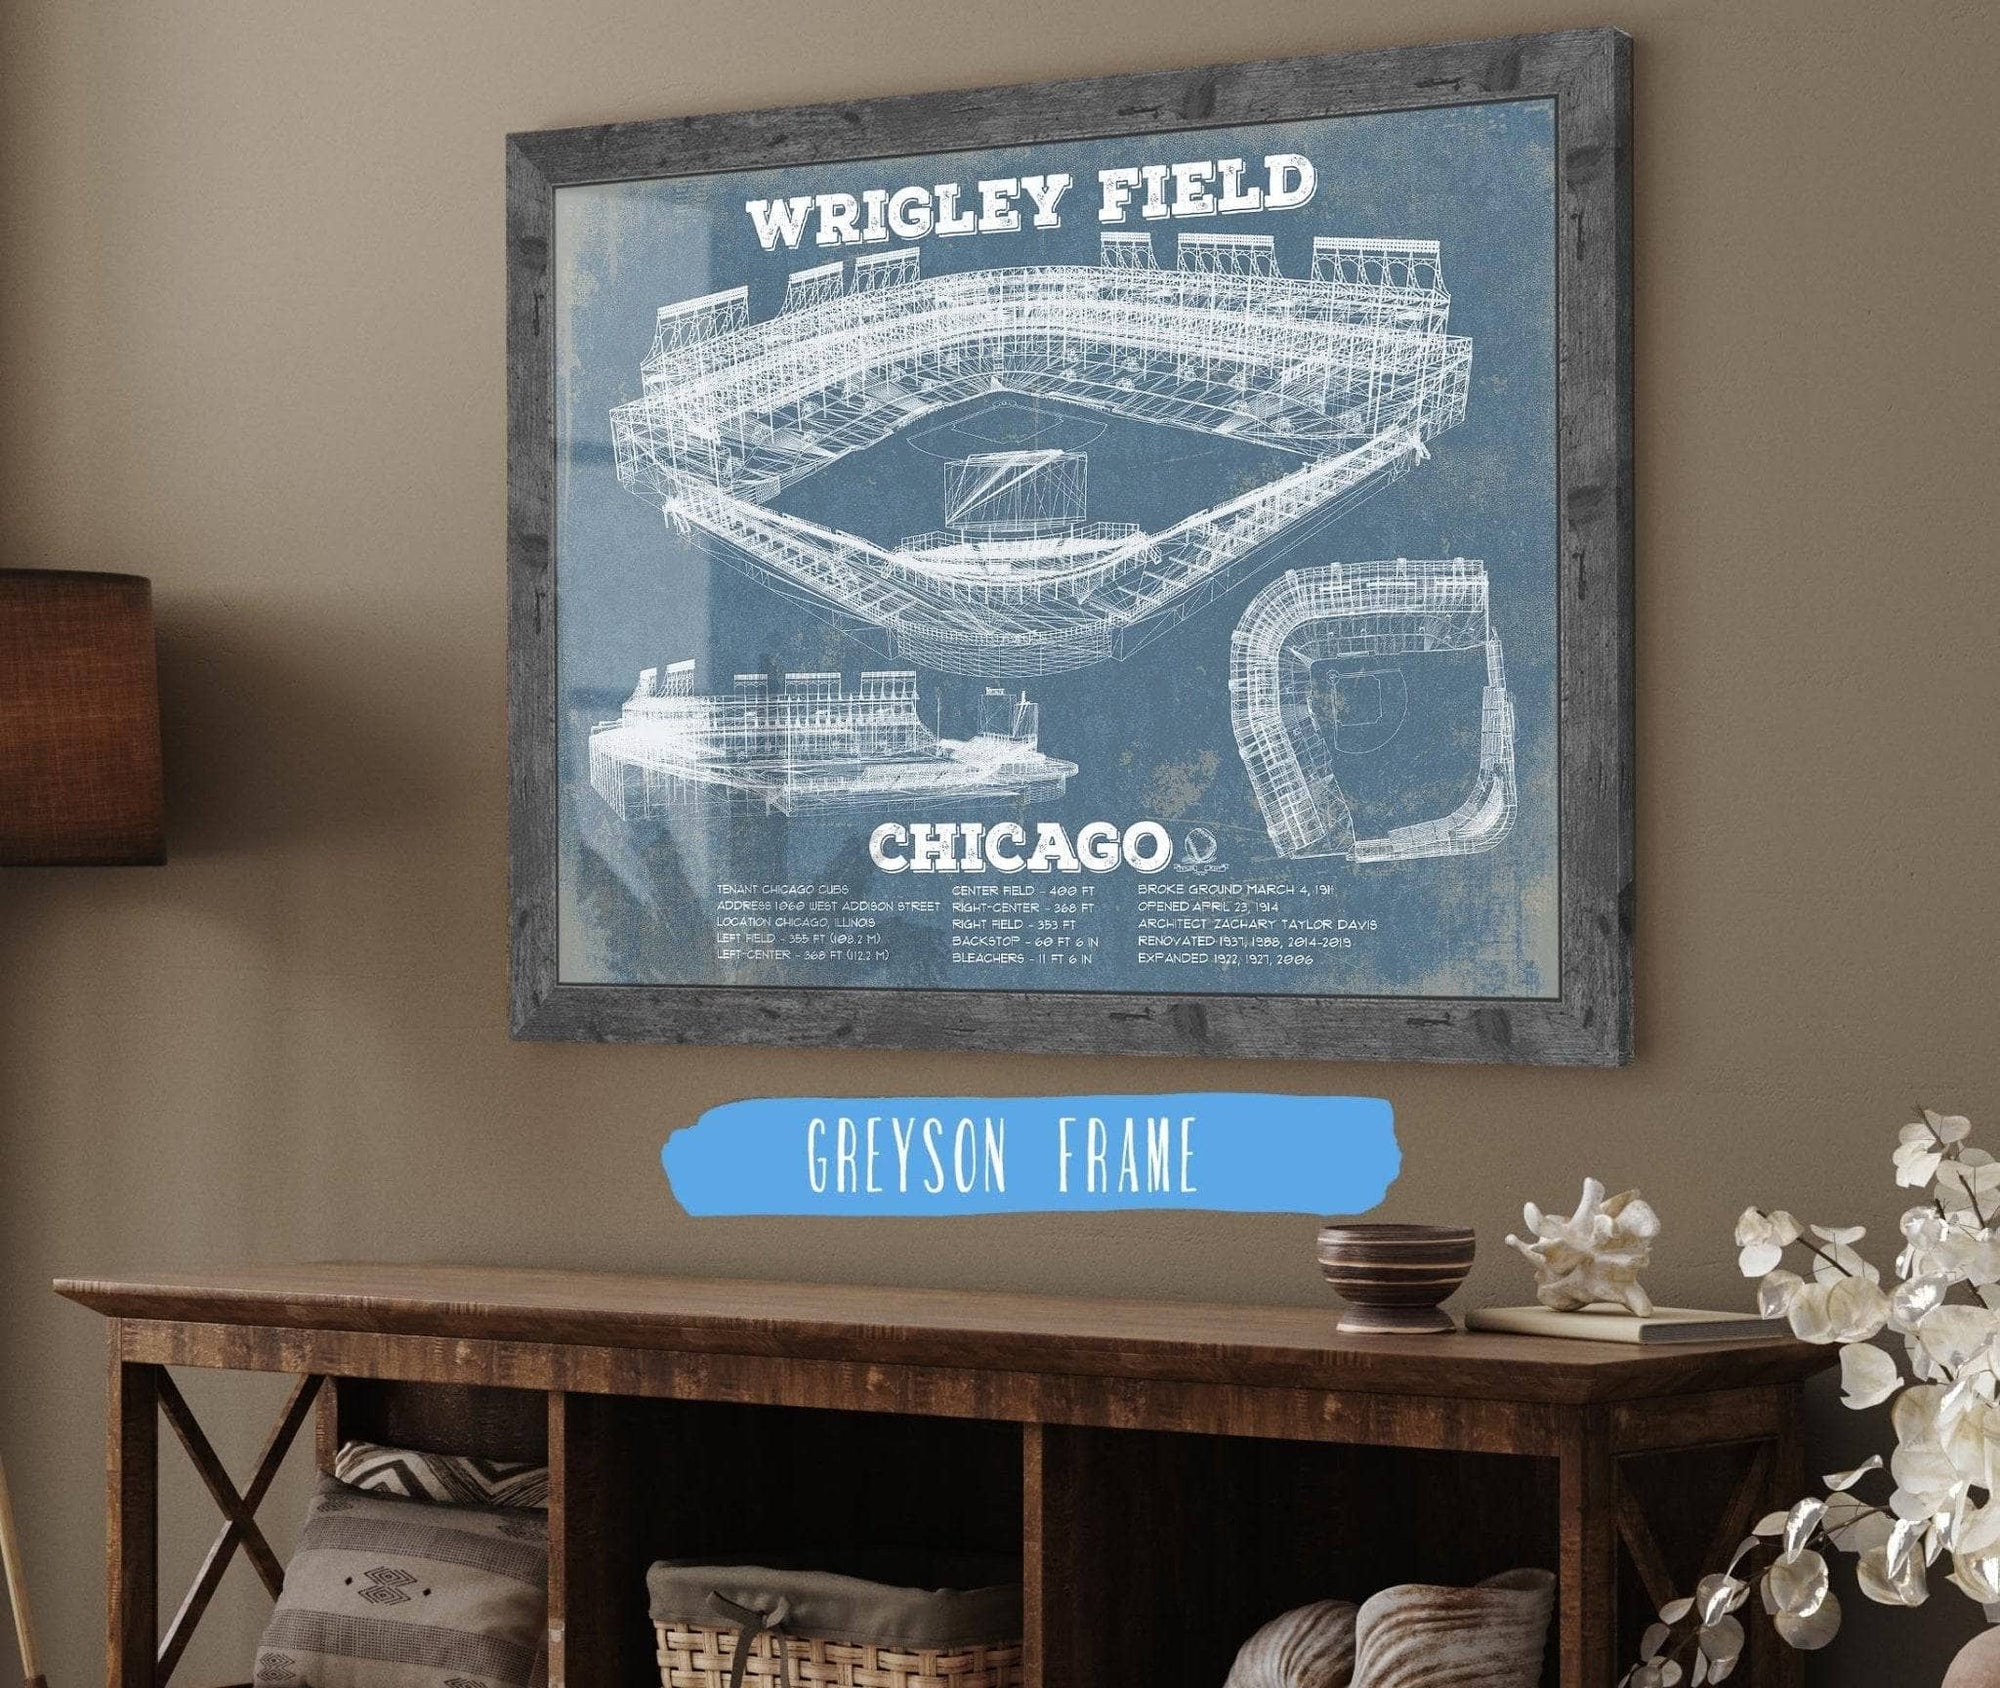 Cutler West Baseball Collection 14" x 11" / Greyson Frame Vintage Wrigley Field Print - Chicago Cubs Baseball Print 703108870-TOP